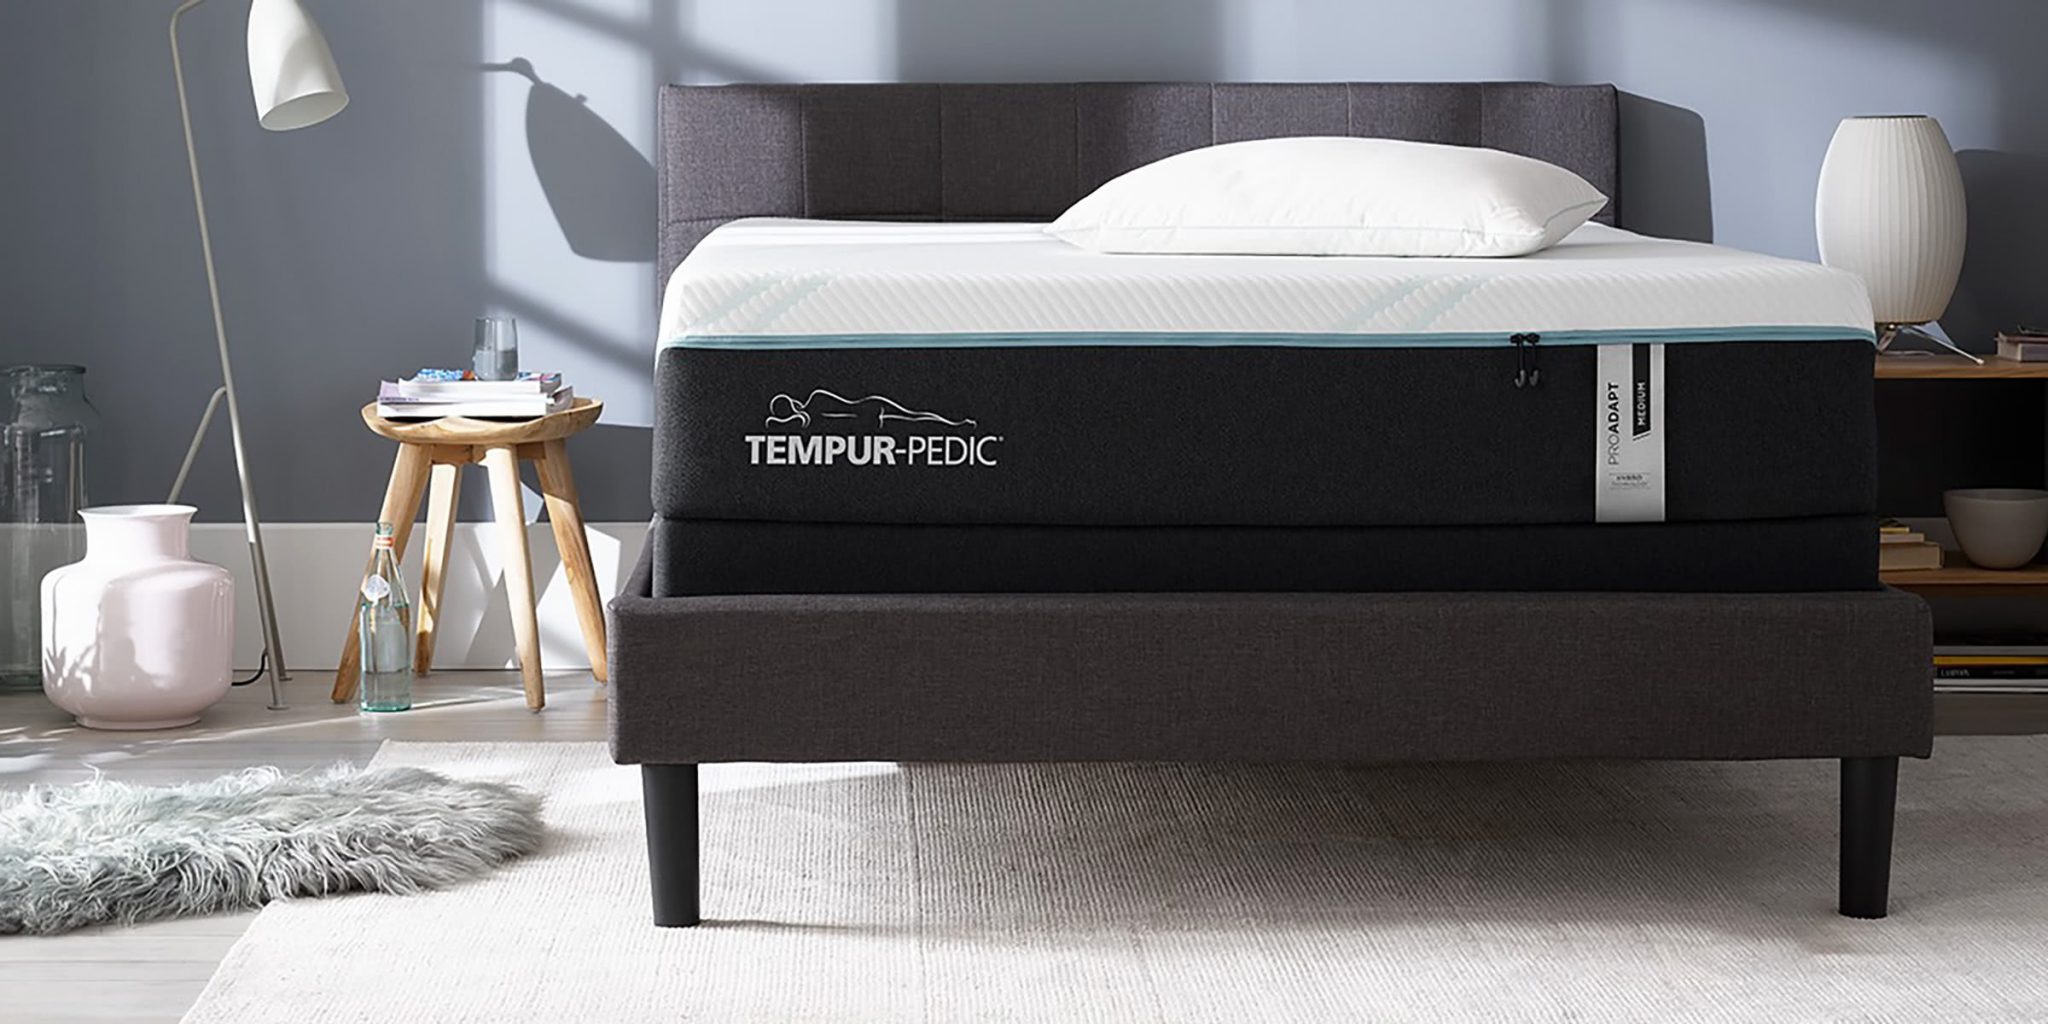 mattress firm tempur pedic sale